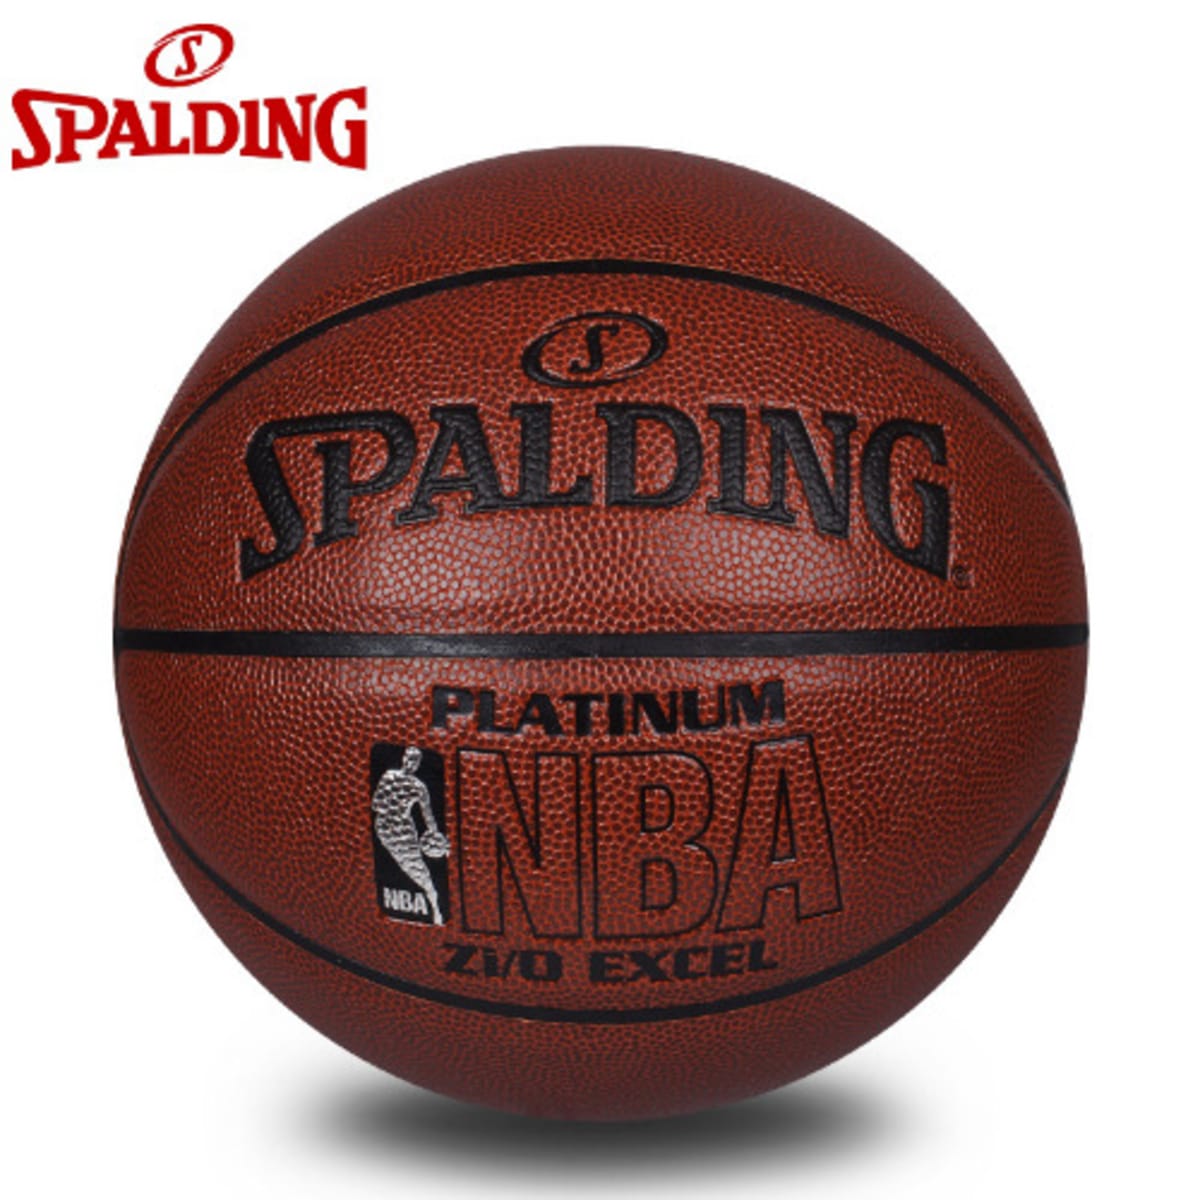 Professional Konga Basketball Nba Spalding Online | Shopping